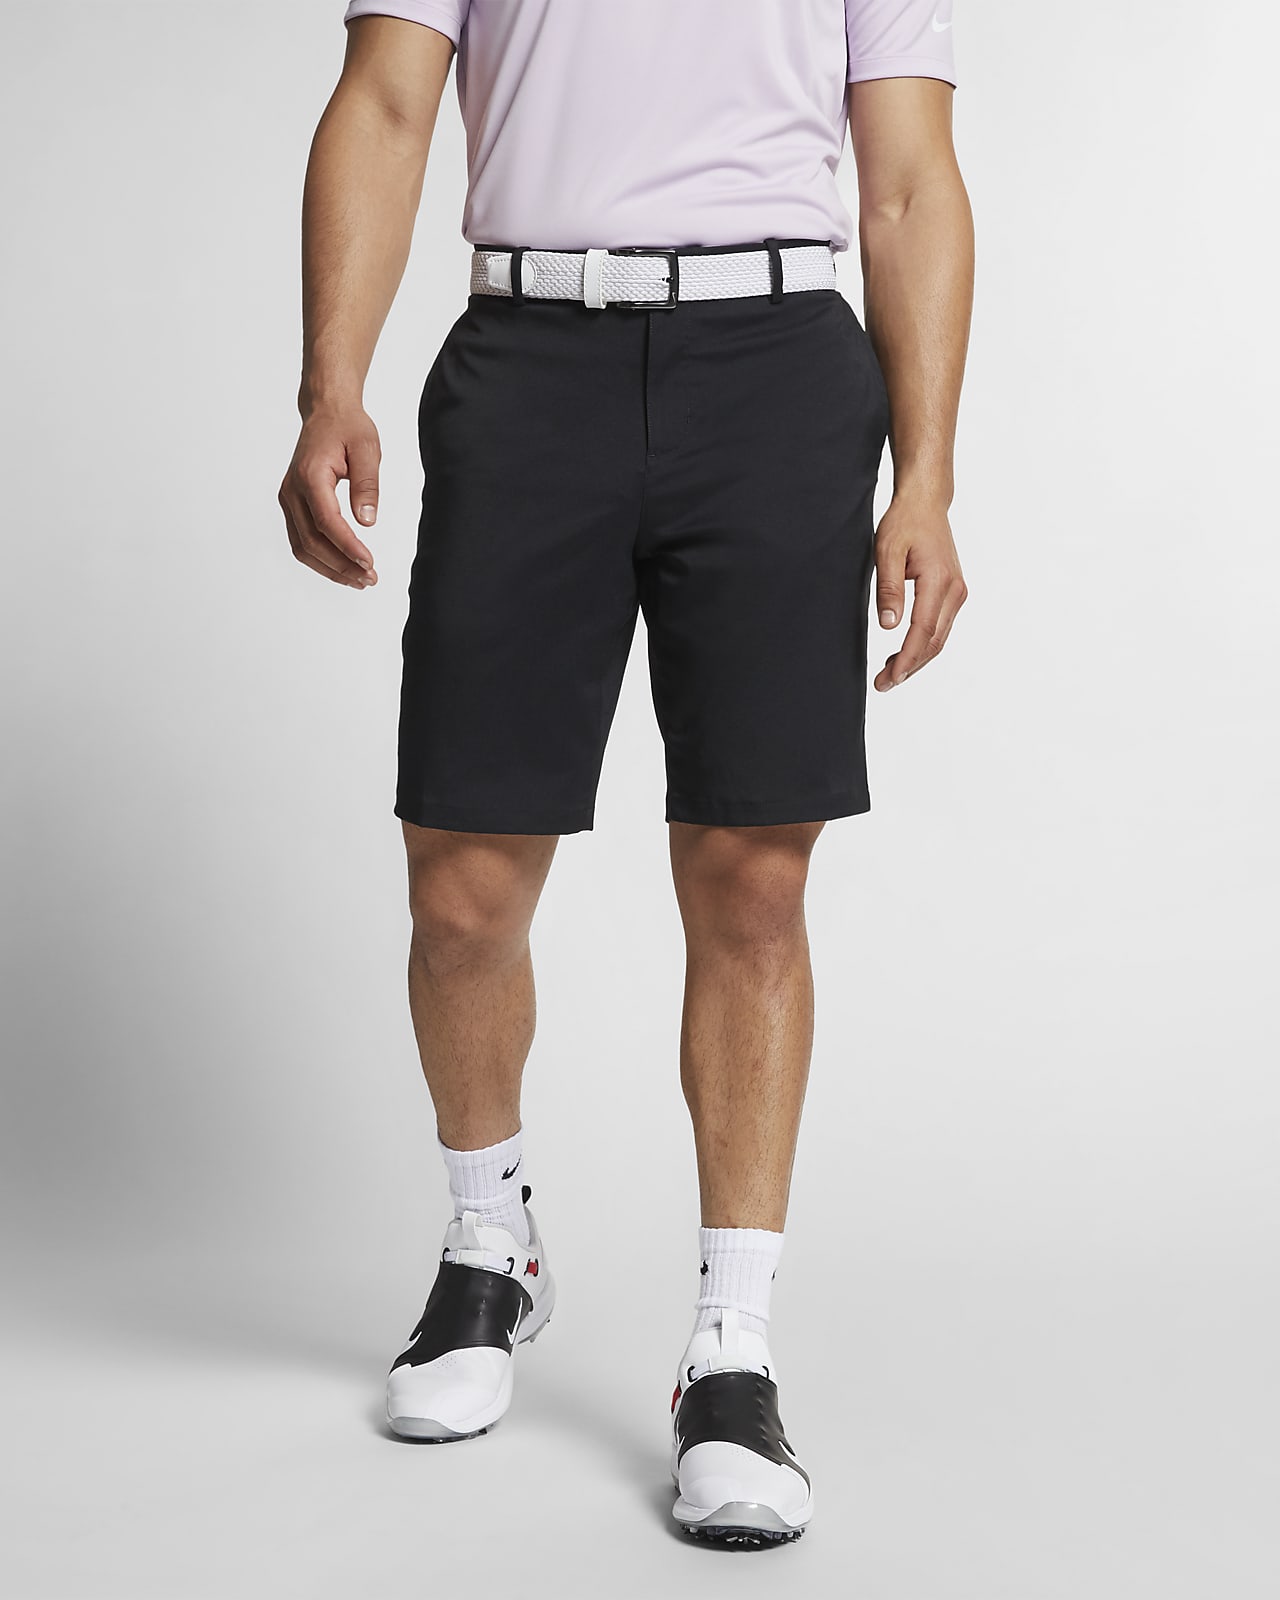 nike flex men's golf shorts